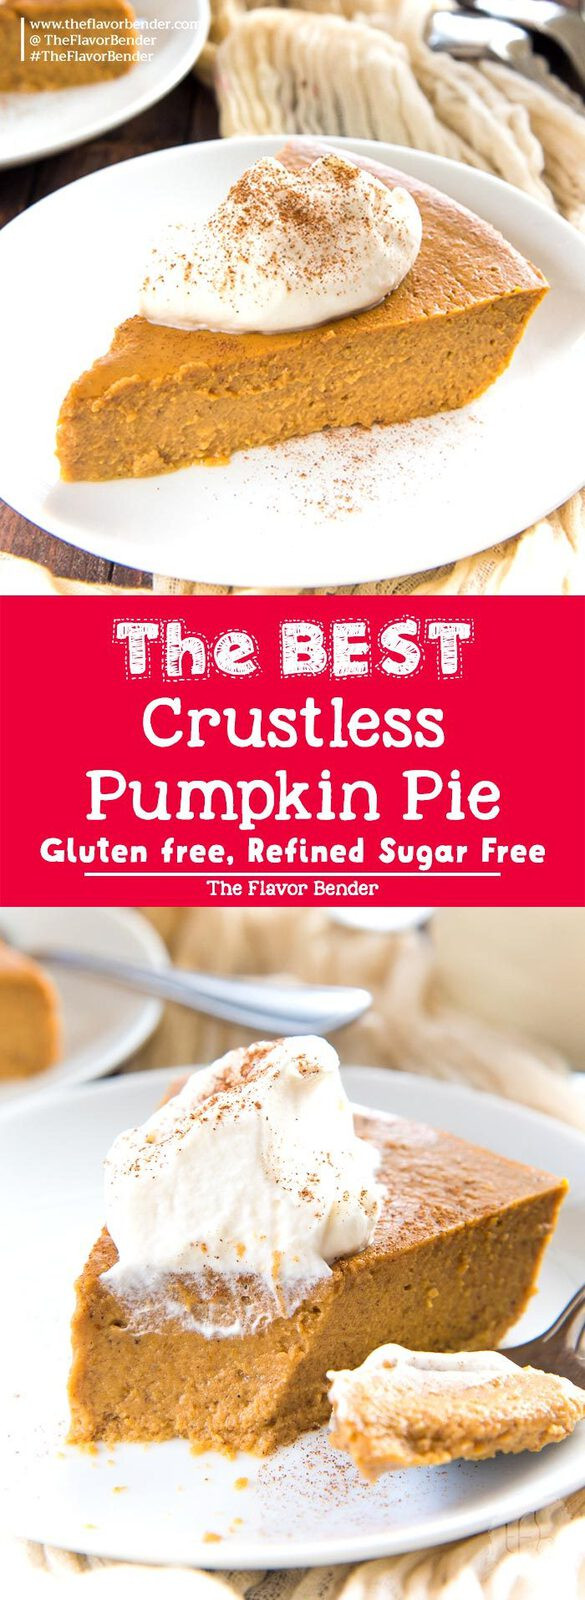 Crustless Dairy Free Pumpkin Pie
 The BEST Crustless Pumpkin Pie The Flavor Bender